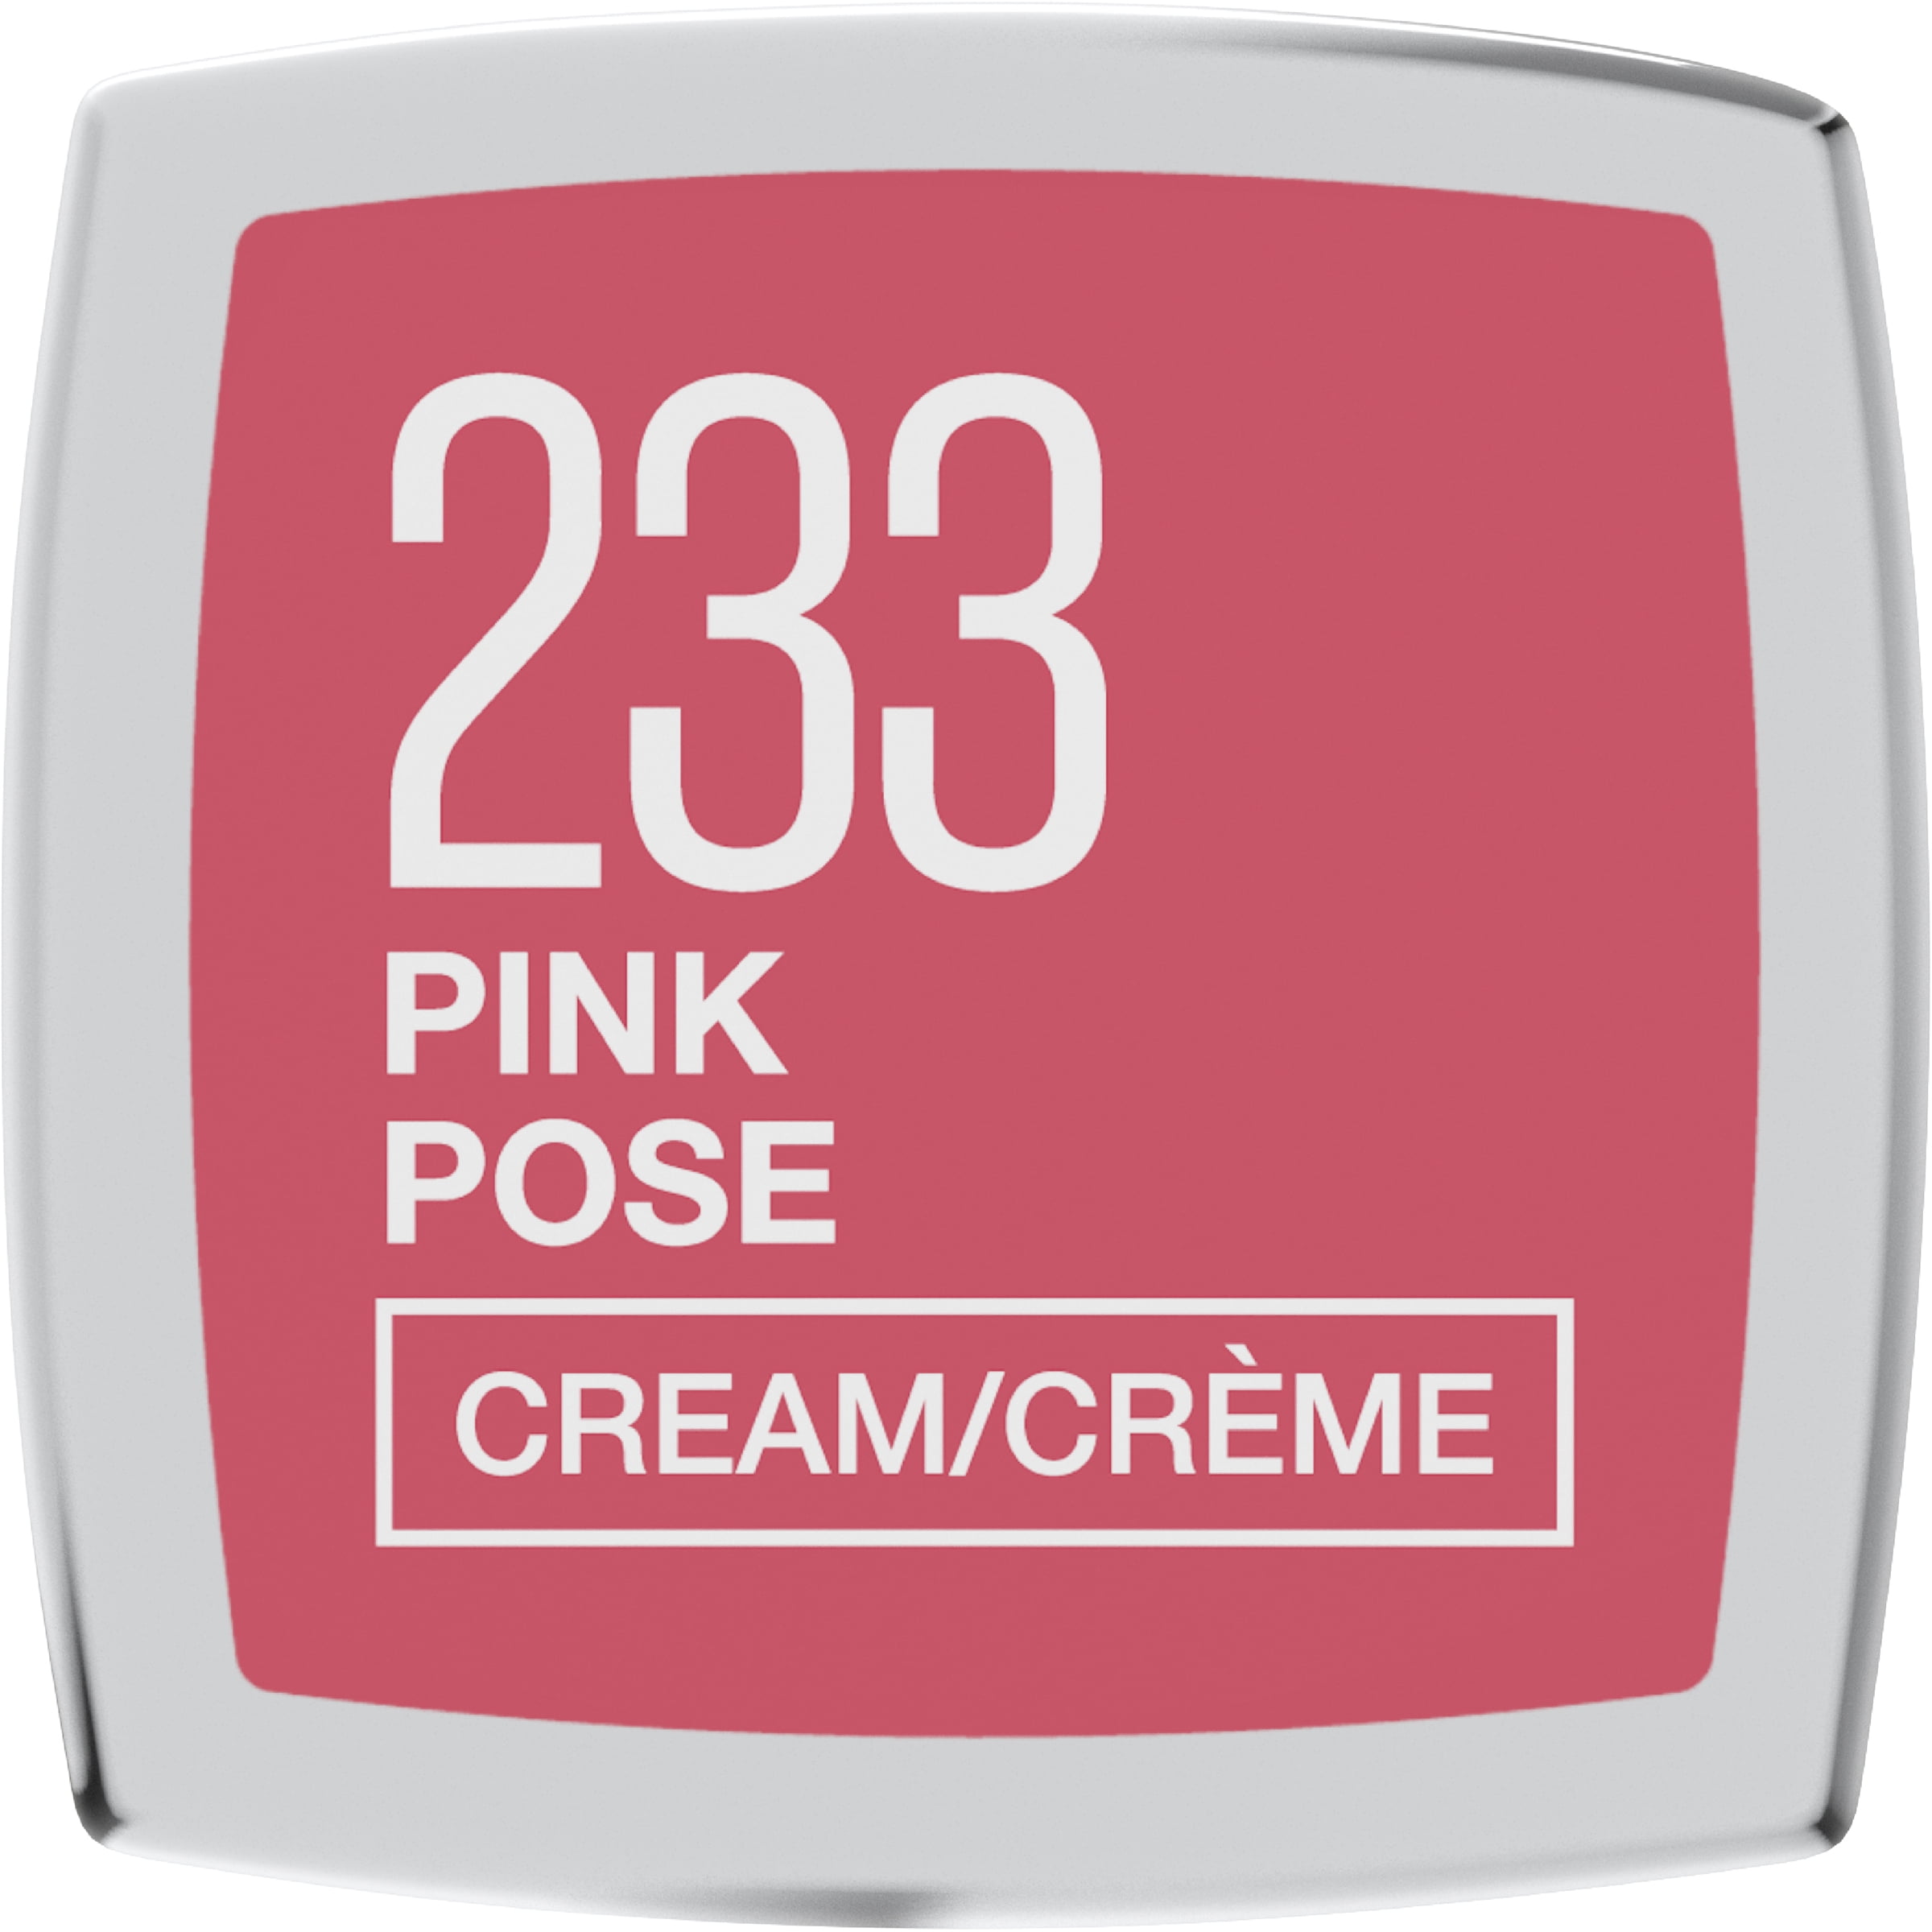 Maybelline Color Sensational Cream Finish Pink Lipstick, Pose